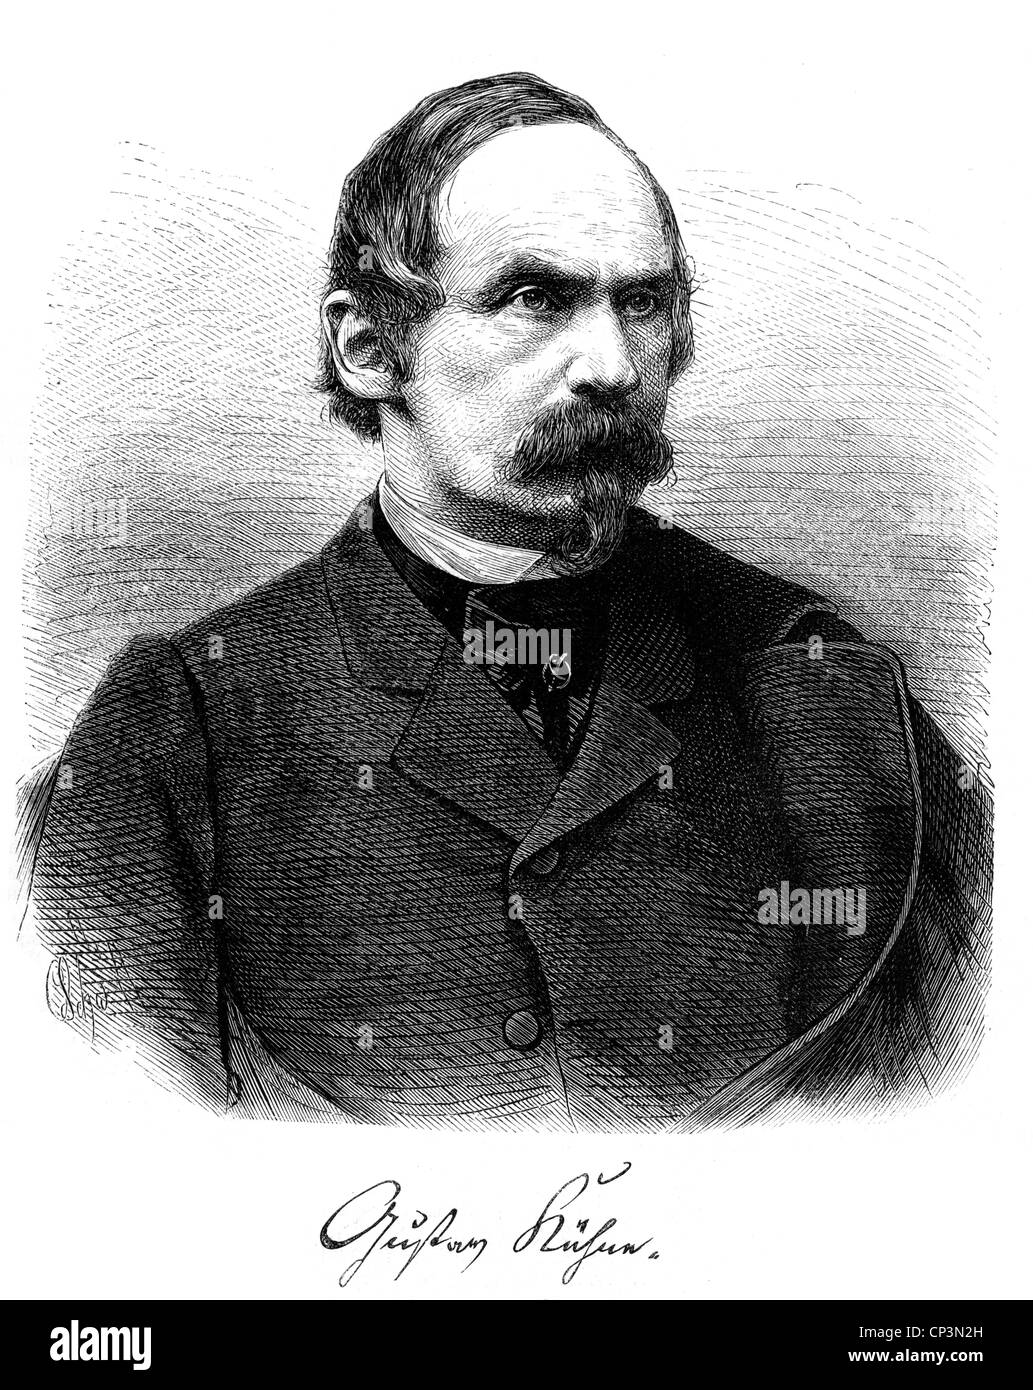 Kuehne, Gustav, 27.12.1806 - 22.4.1888, German author / writer, literary critic, portrait, with signature, wood engraving, 19th century, Stock Photo